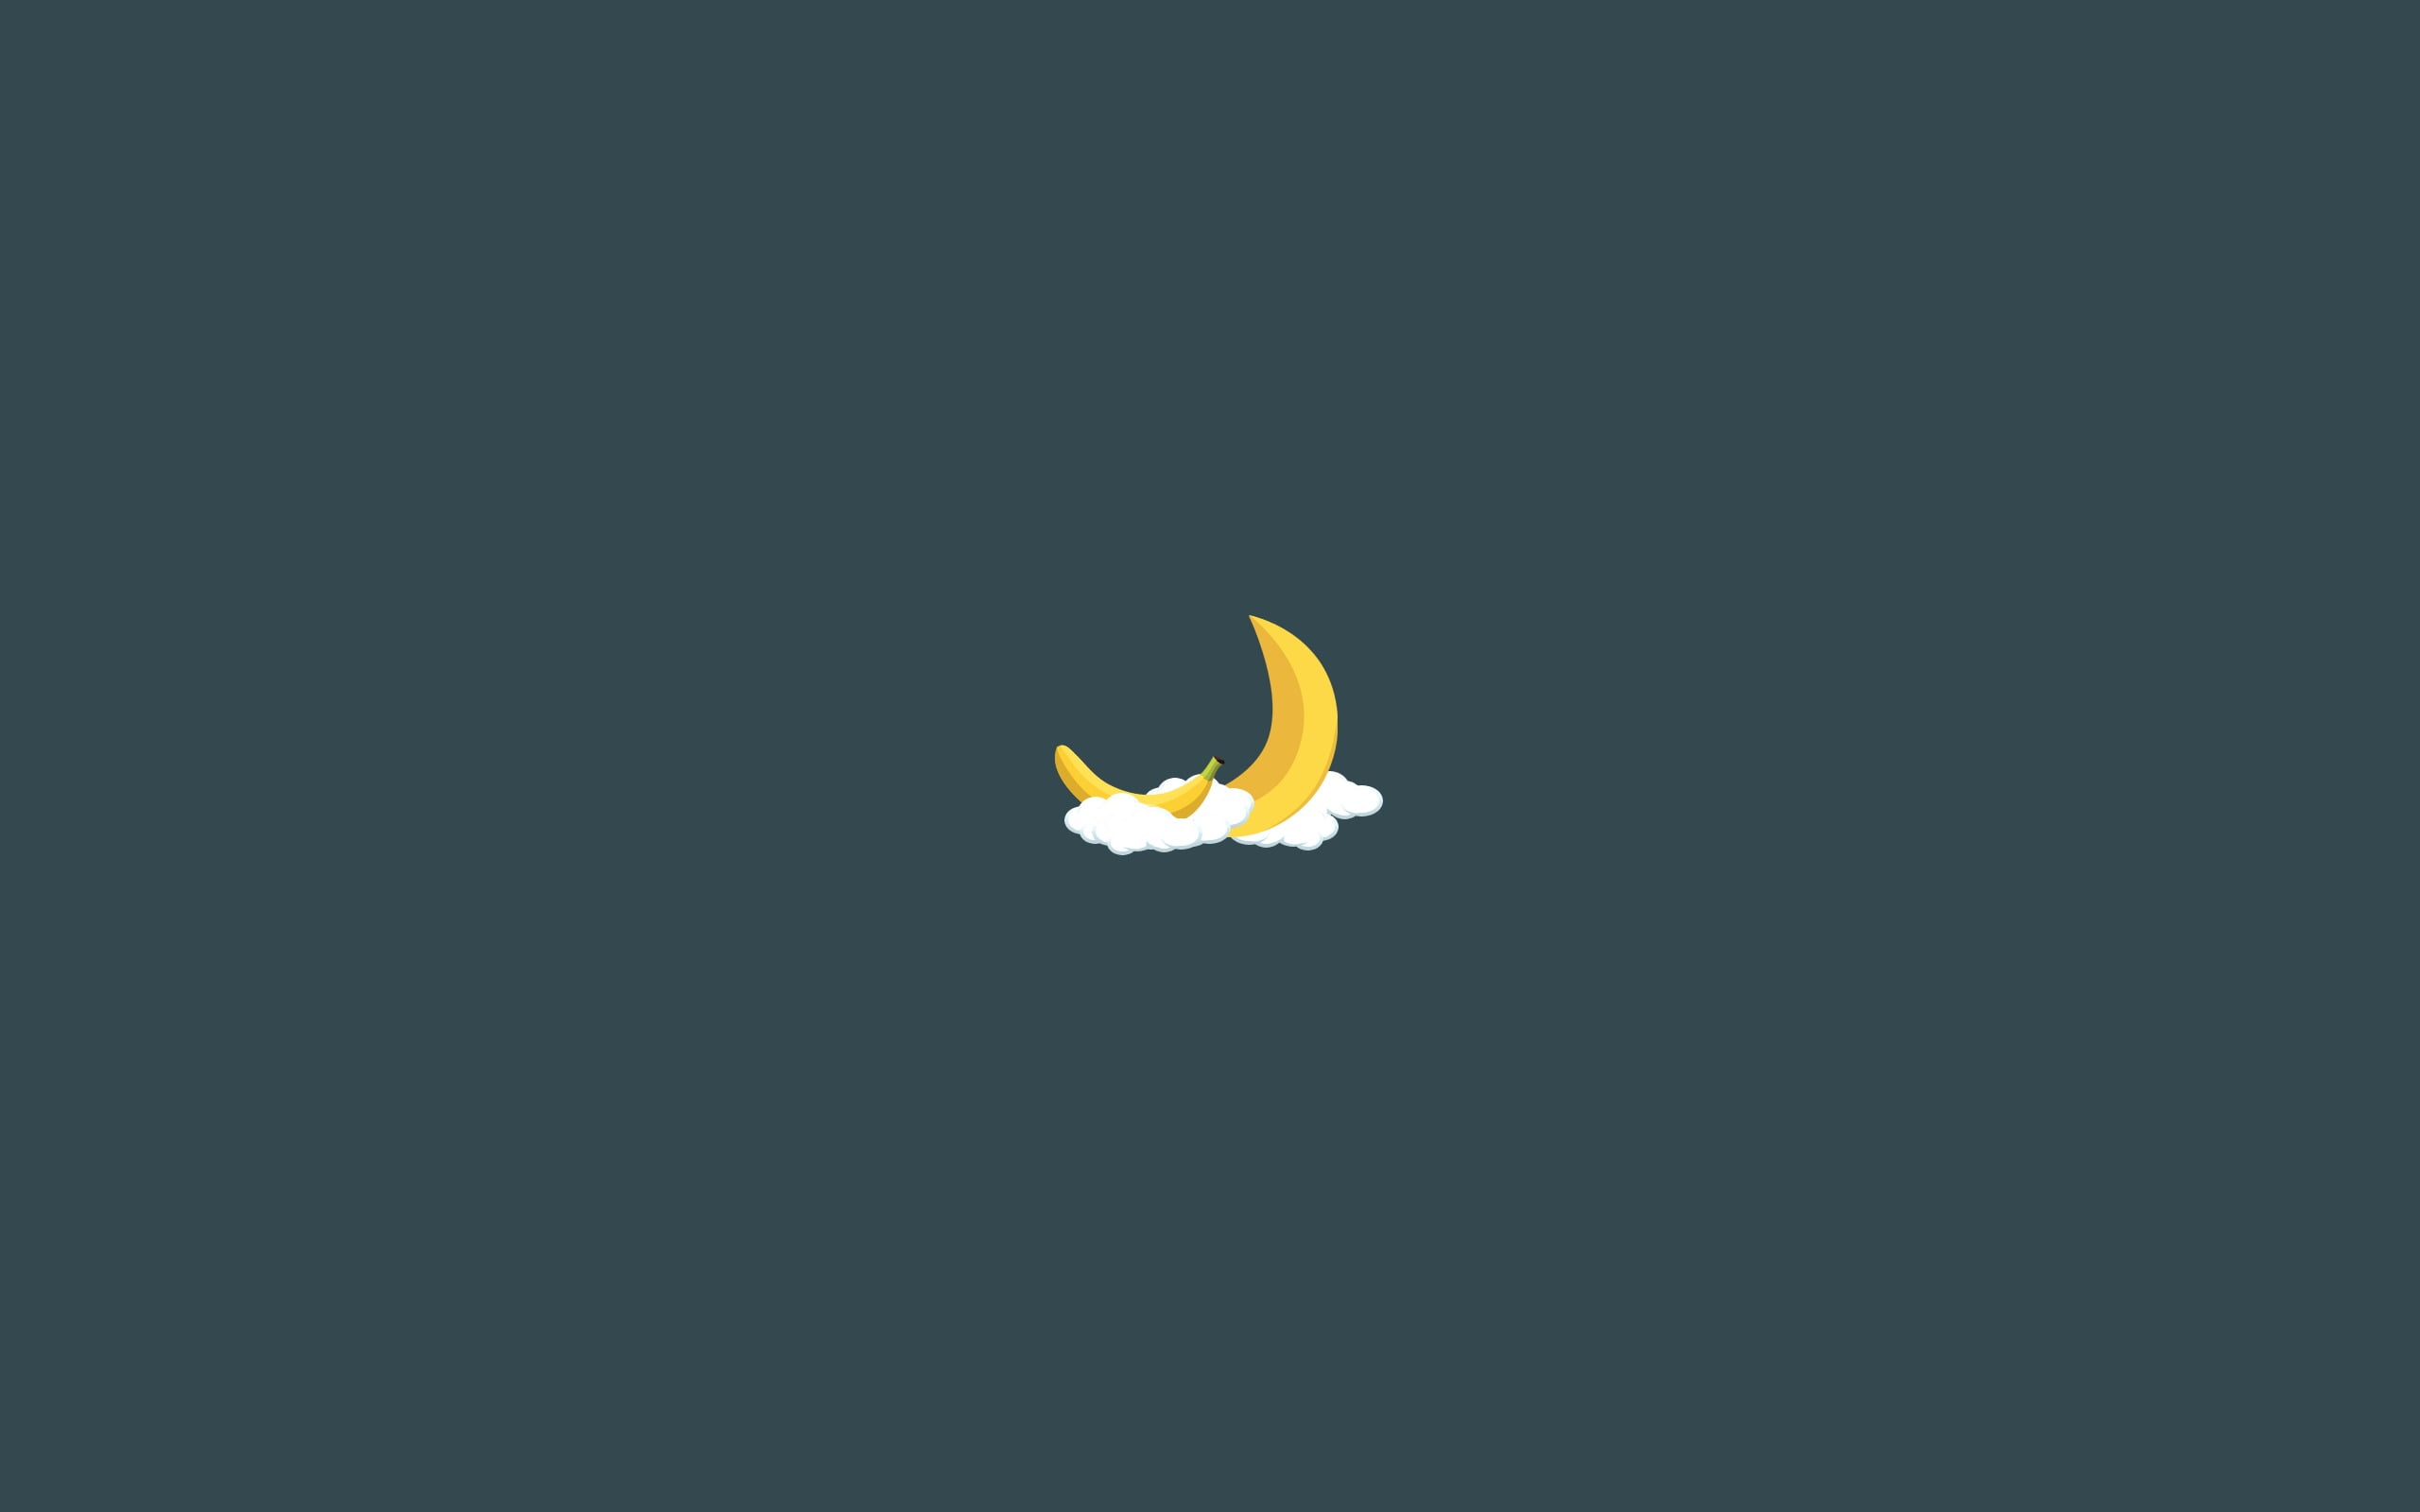 humor, minimalism, simple background, Moon, bananas, clouds